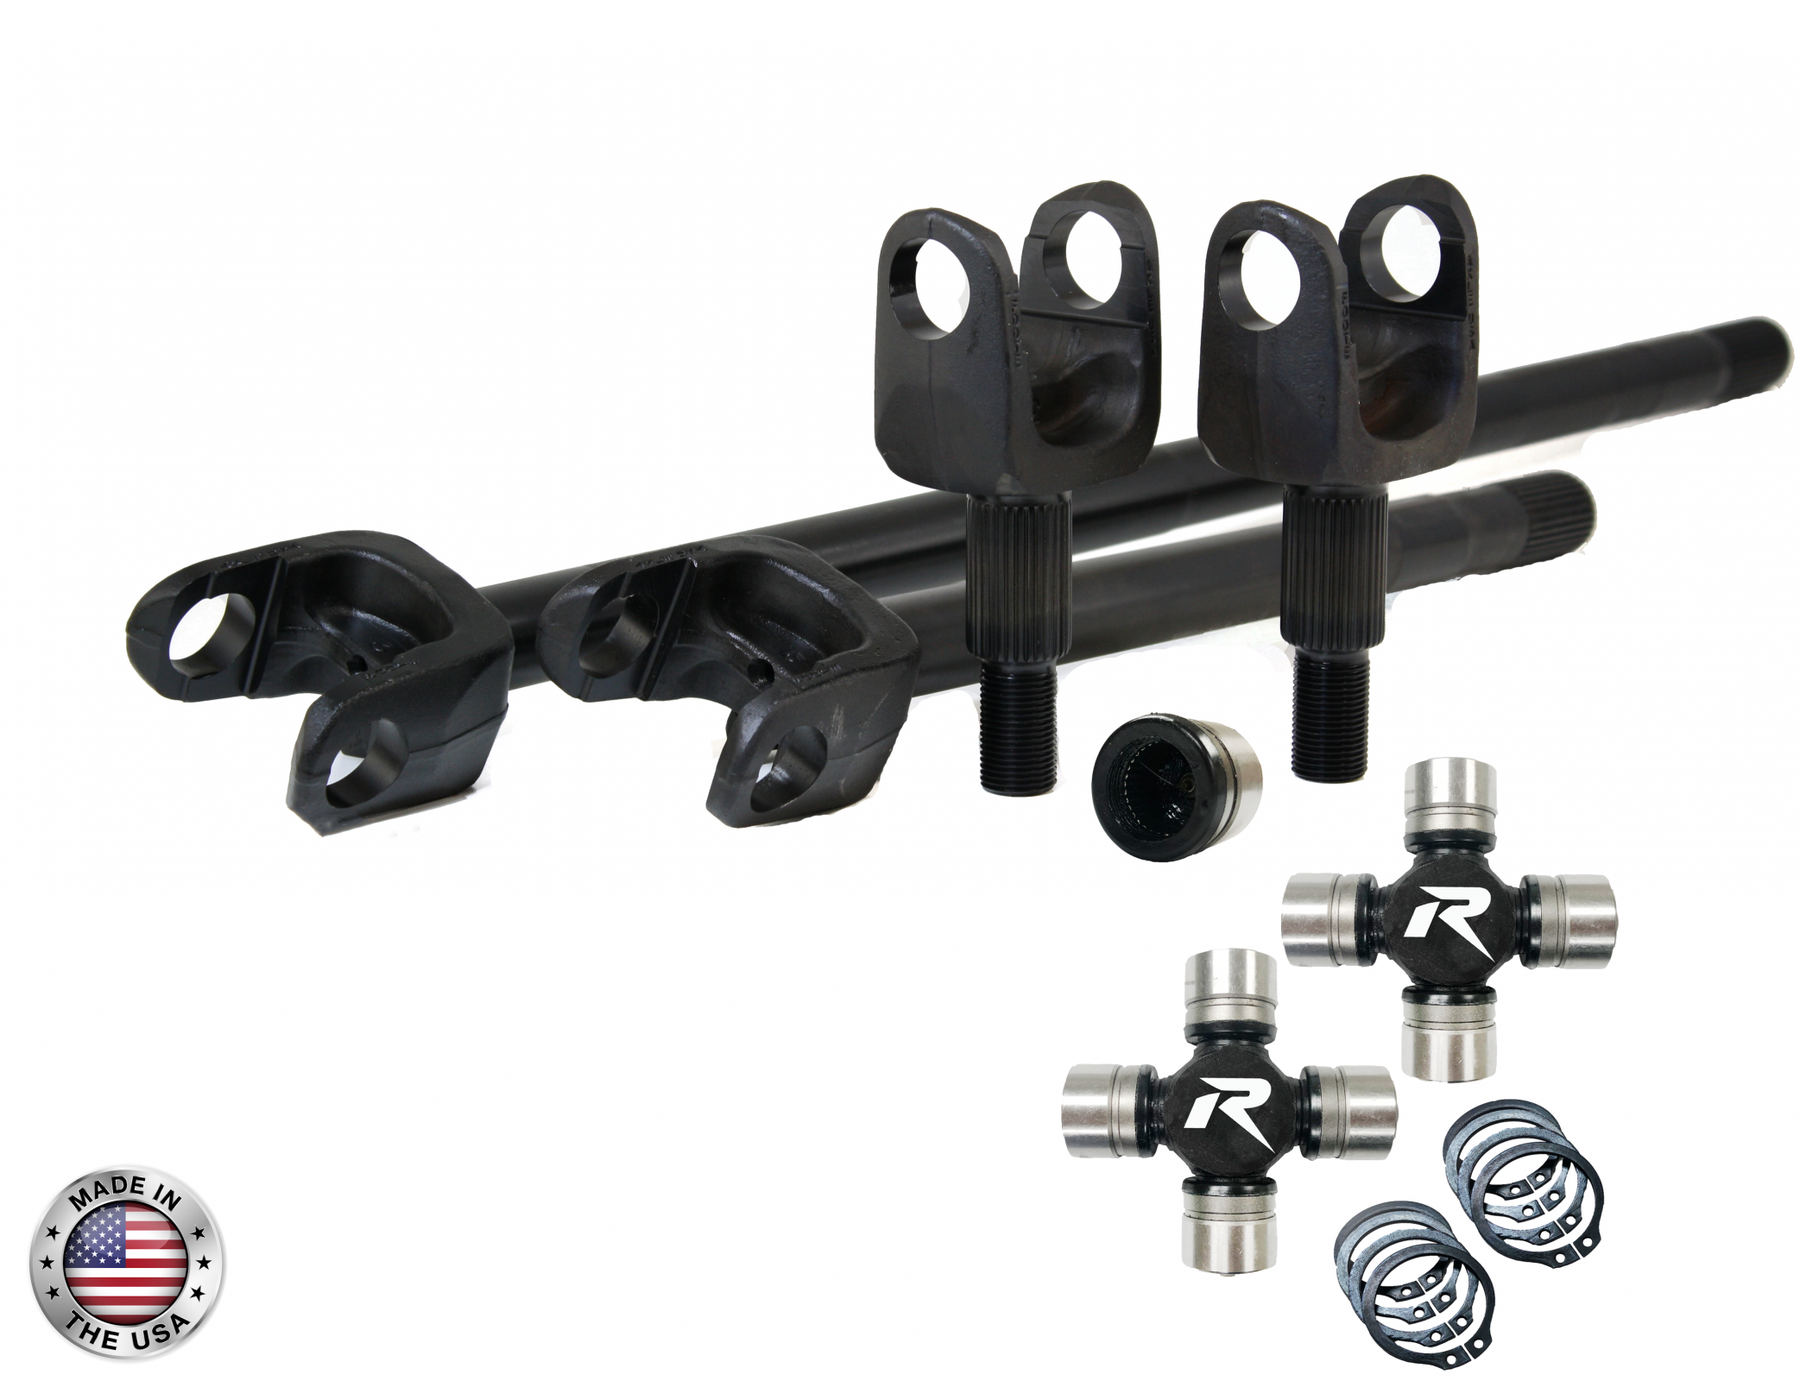 Revolution Gear & Axle 4340 Chromoly Front Axle Kit, Dana 30, 30 Spline, Hd Chromoly U-Joints, Us